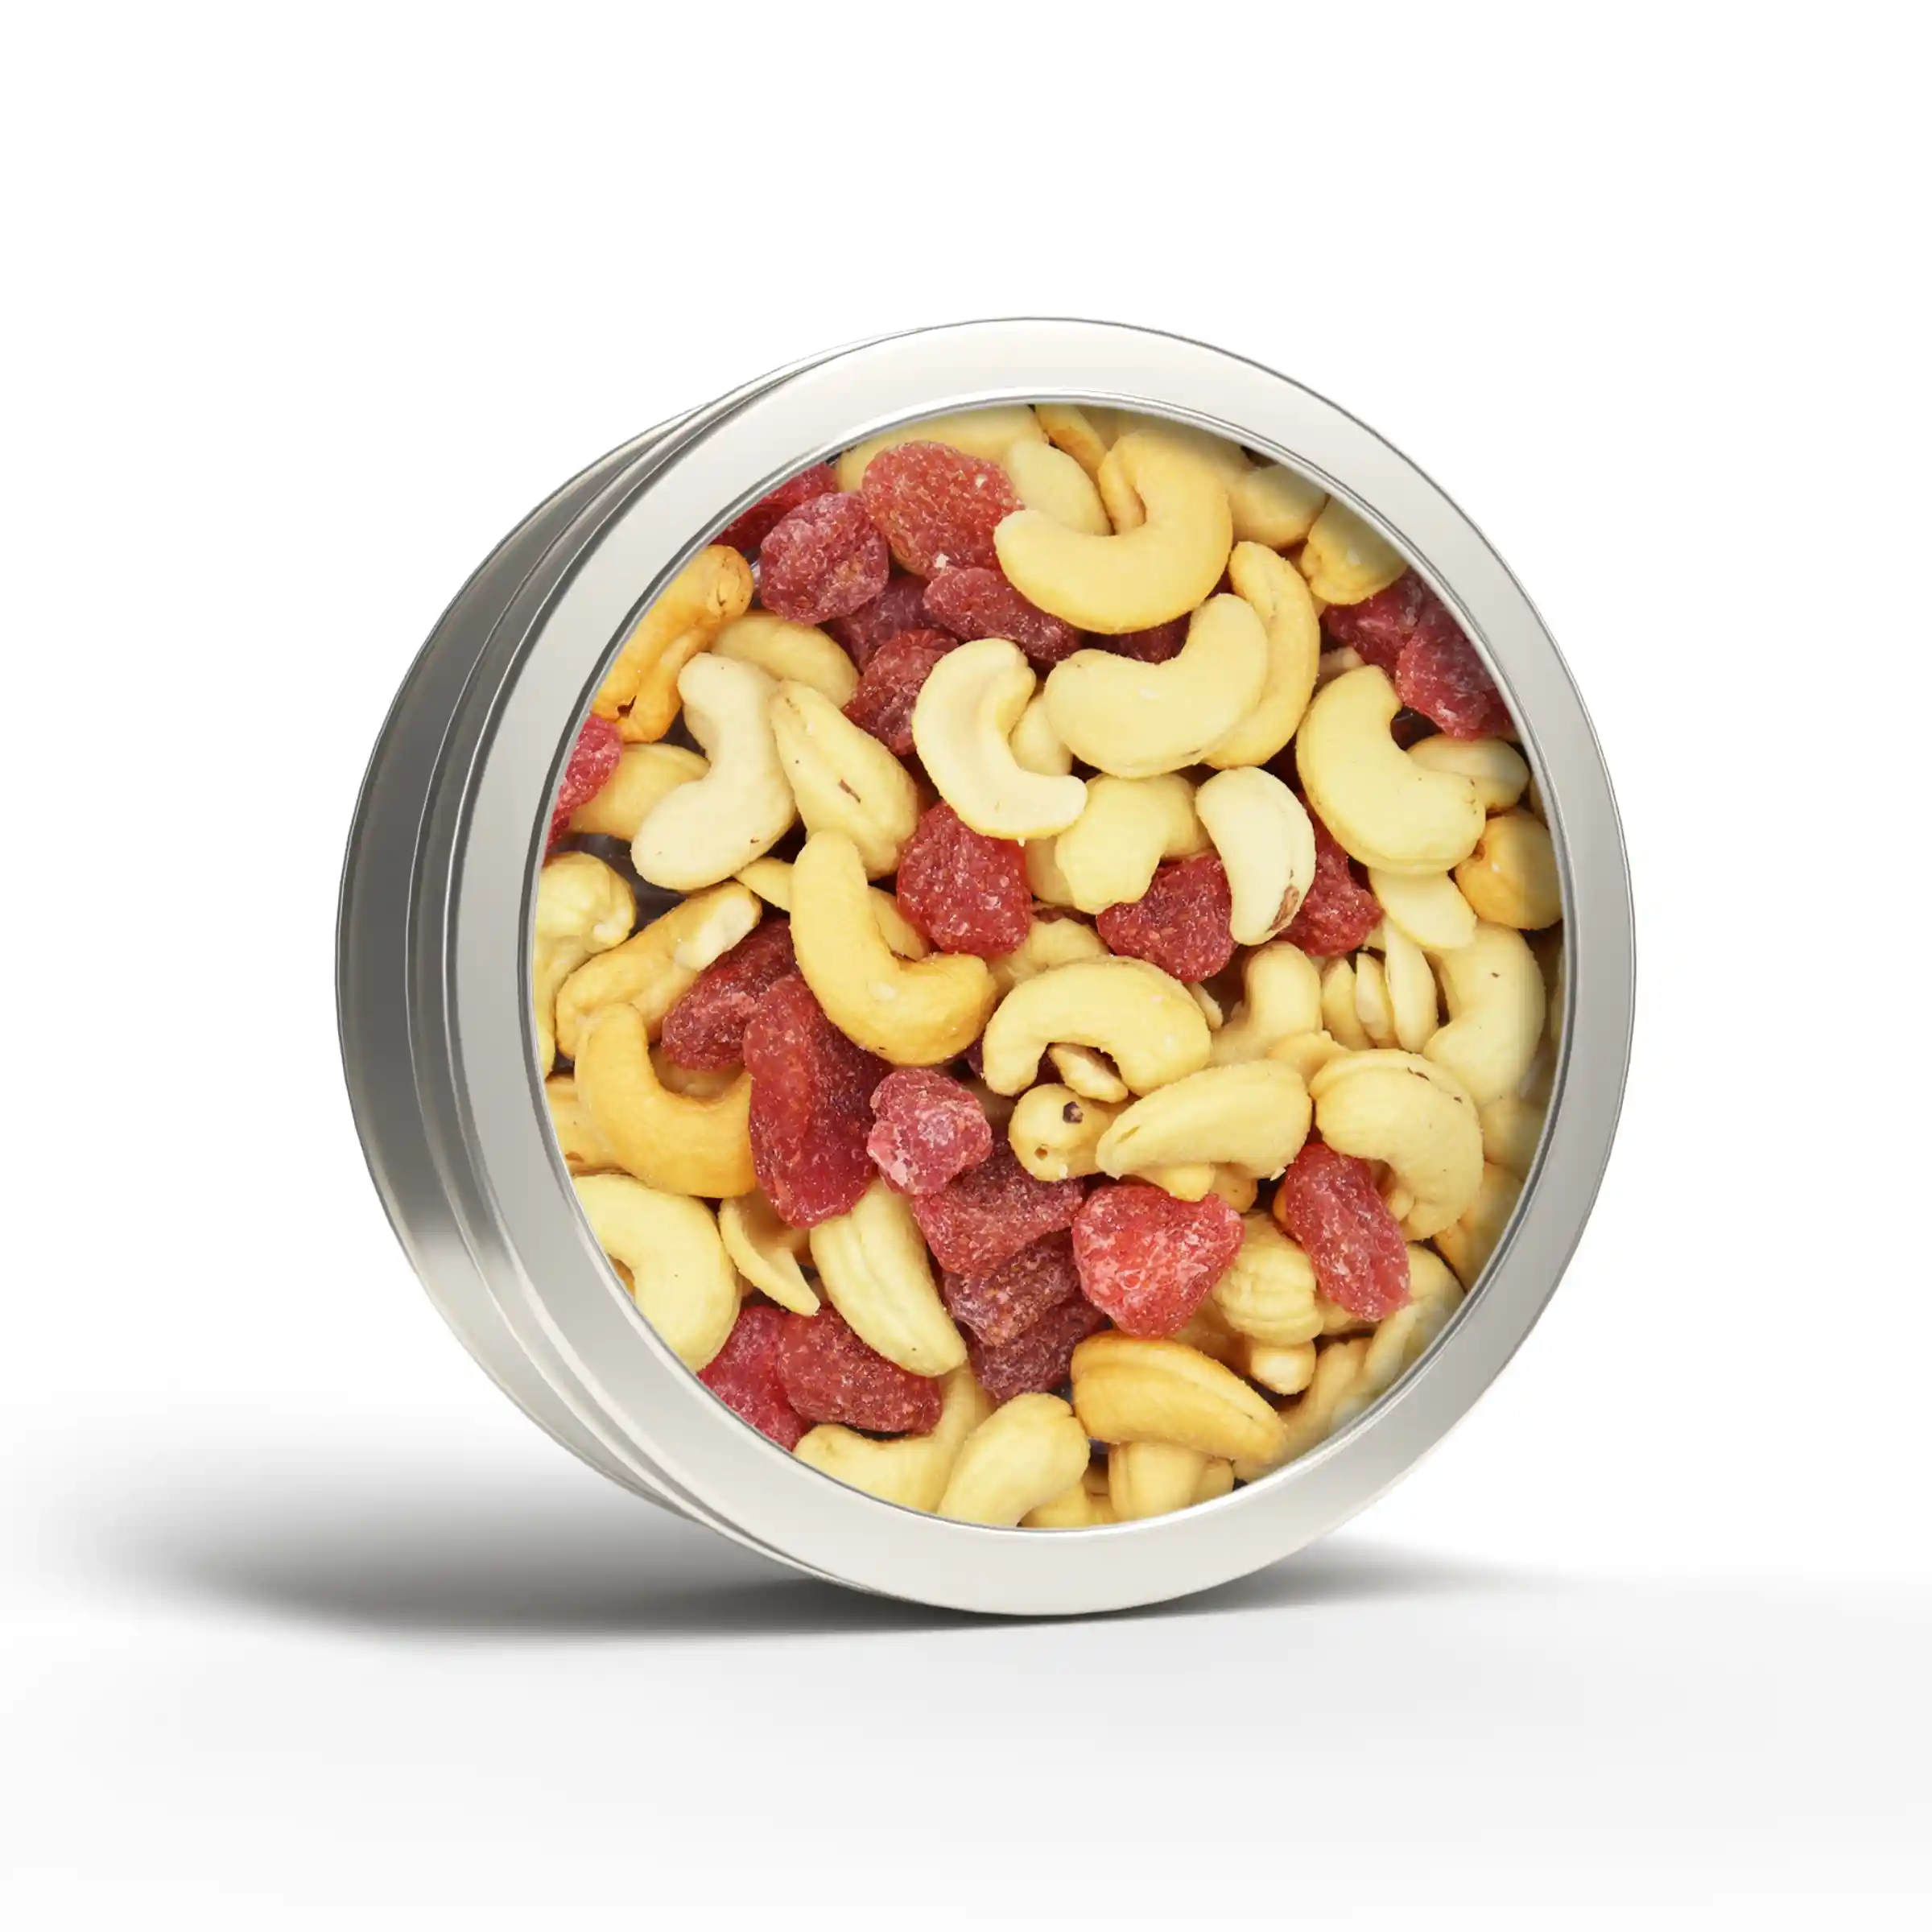 L'Orenta Nuts Is Revolutionizing Healthy Snacks